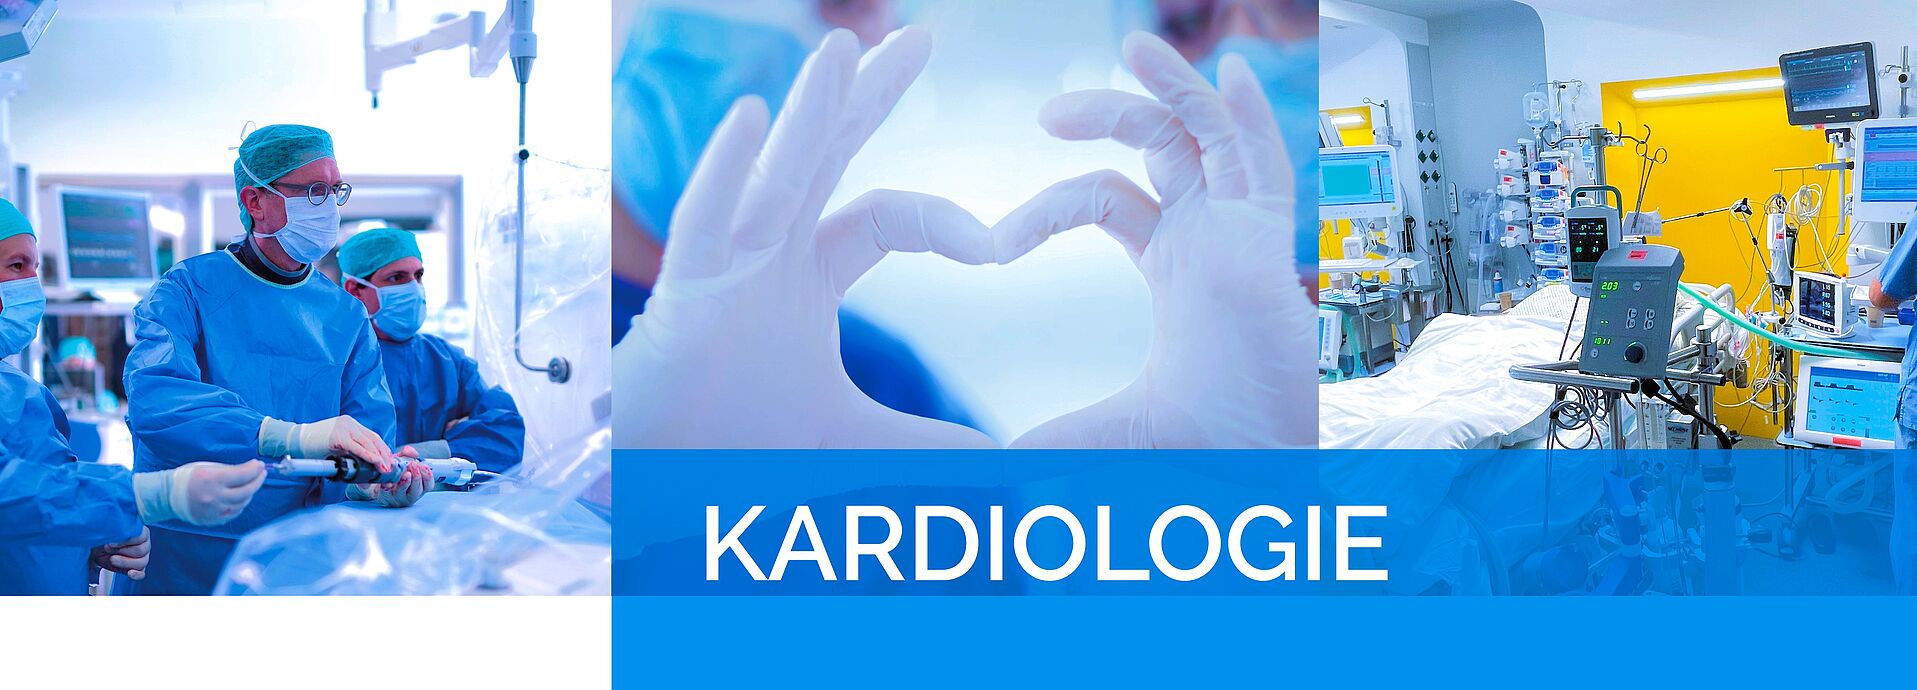 Kardiologie an der Kerckhoff-Klinik